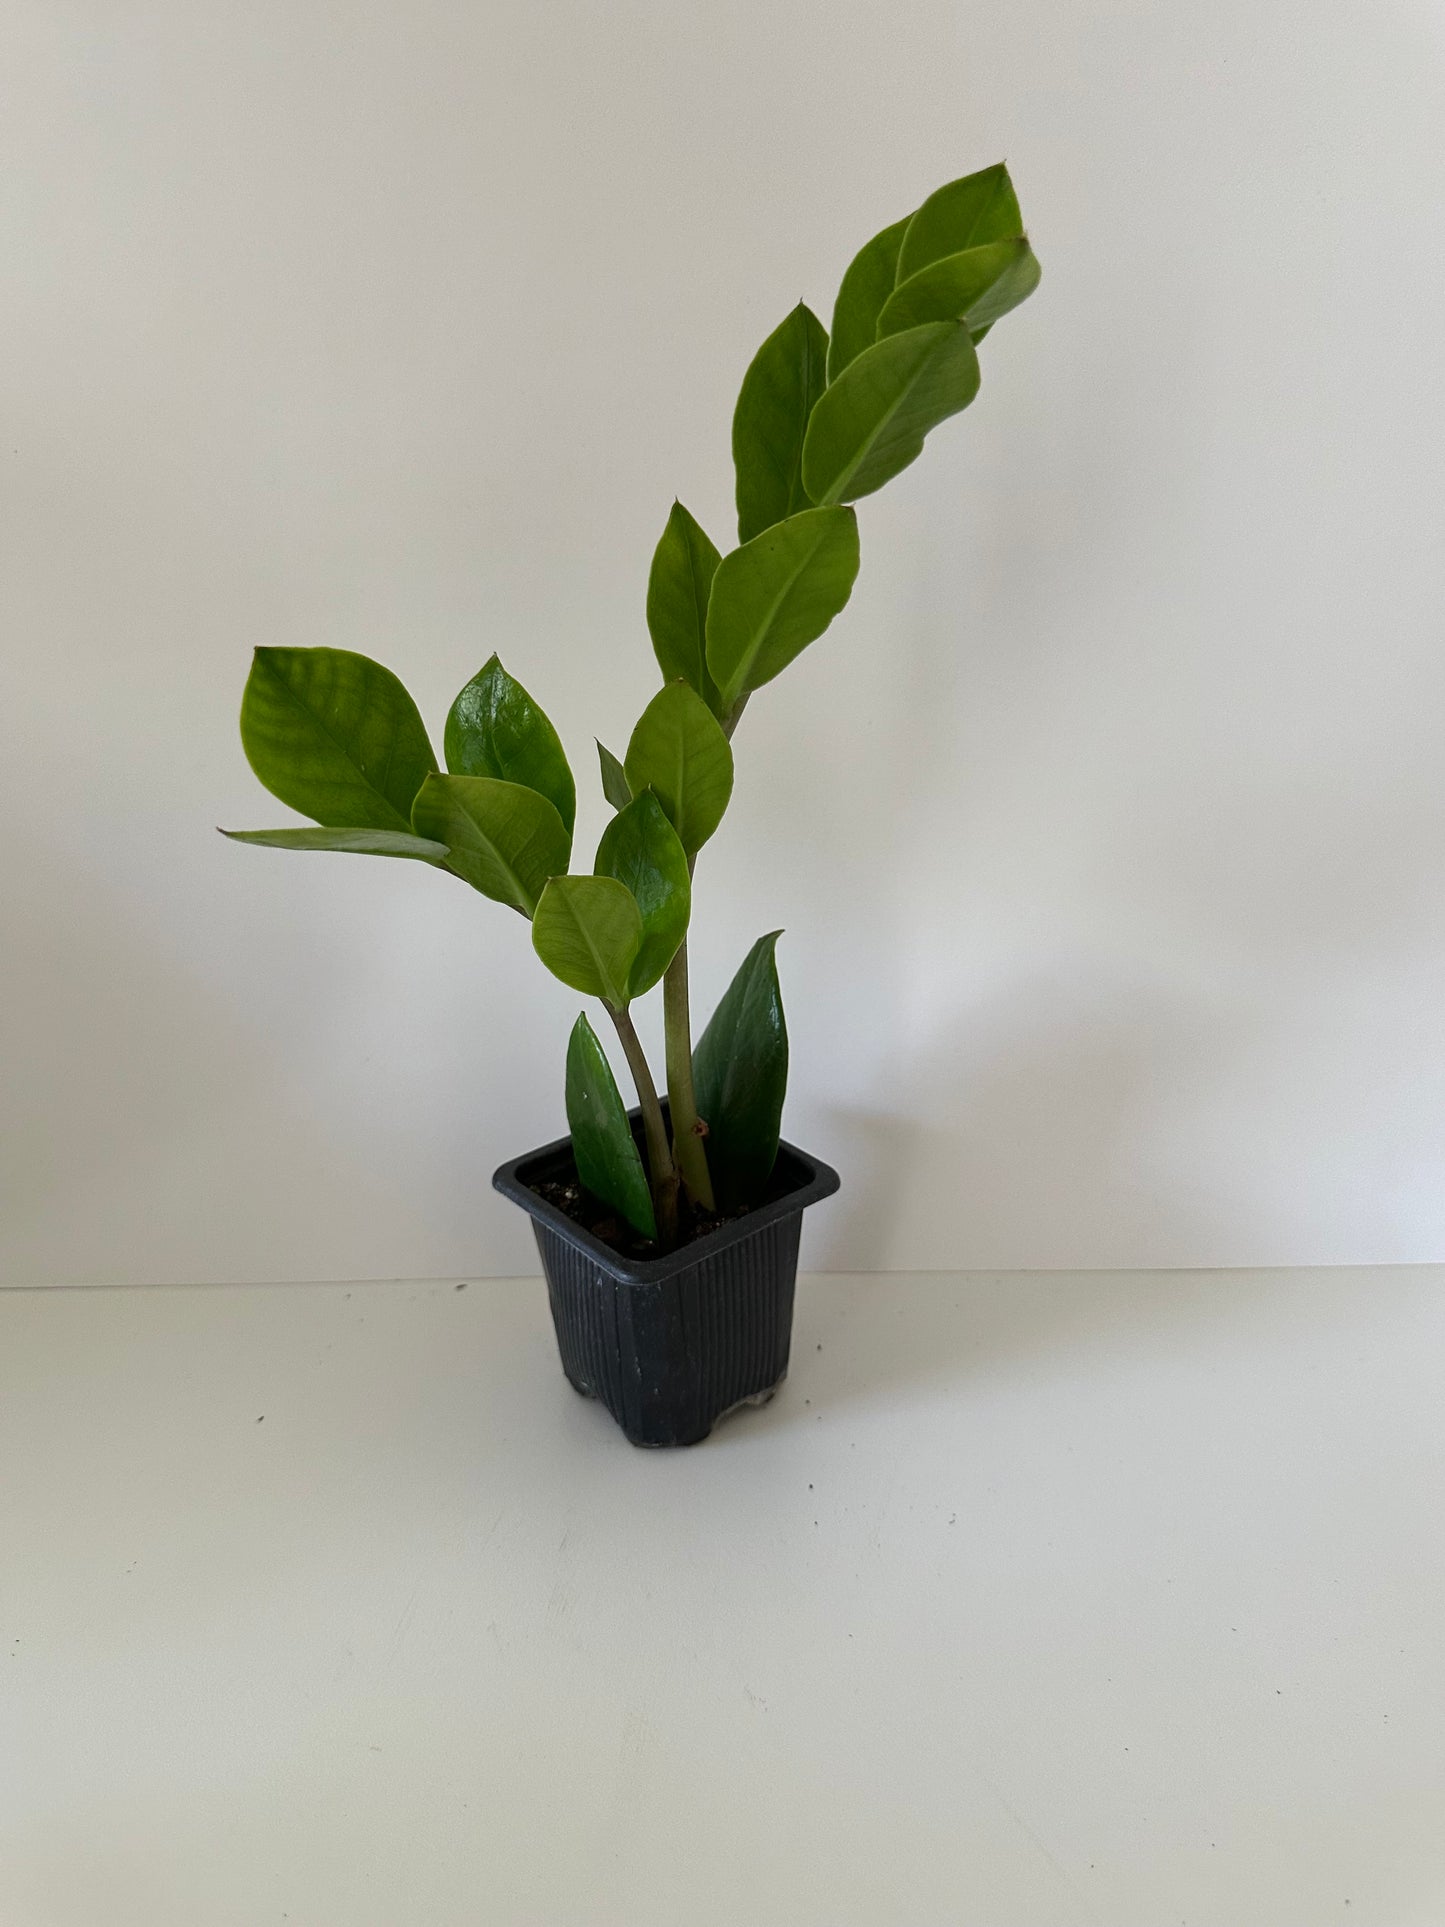 Zamioculcas Zamiifolia 'ZZ Plant'- 🌱 Beginner Friendly, Low Light, Drought Tolerant Tropical Houseplant- (3 Inch, 4 Inch, or 6 Inch Nursery Pot)